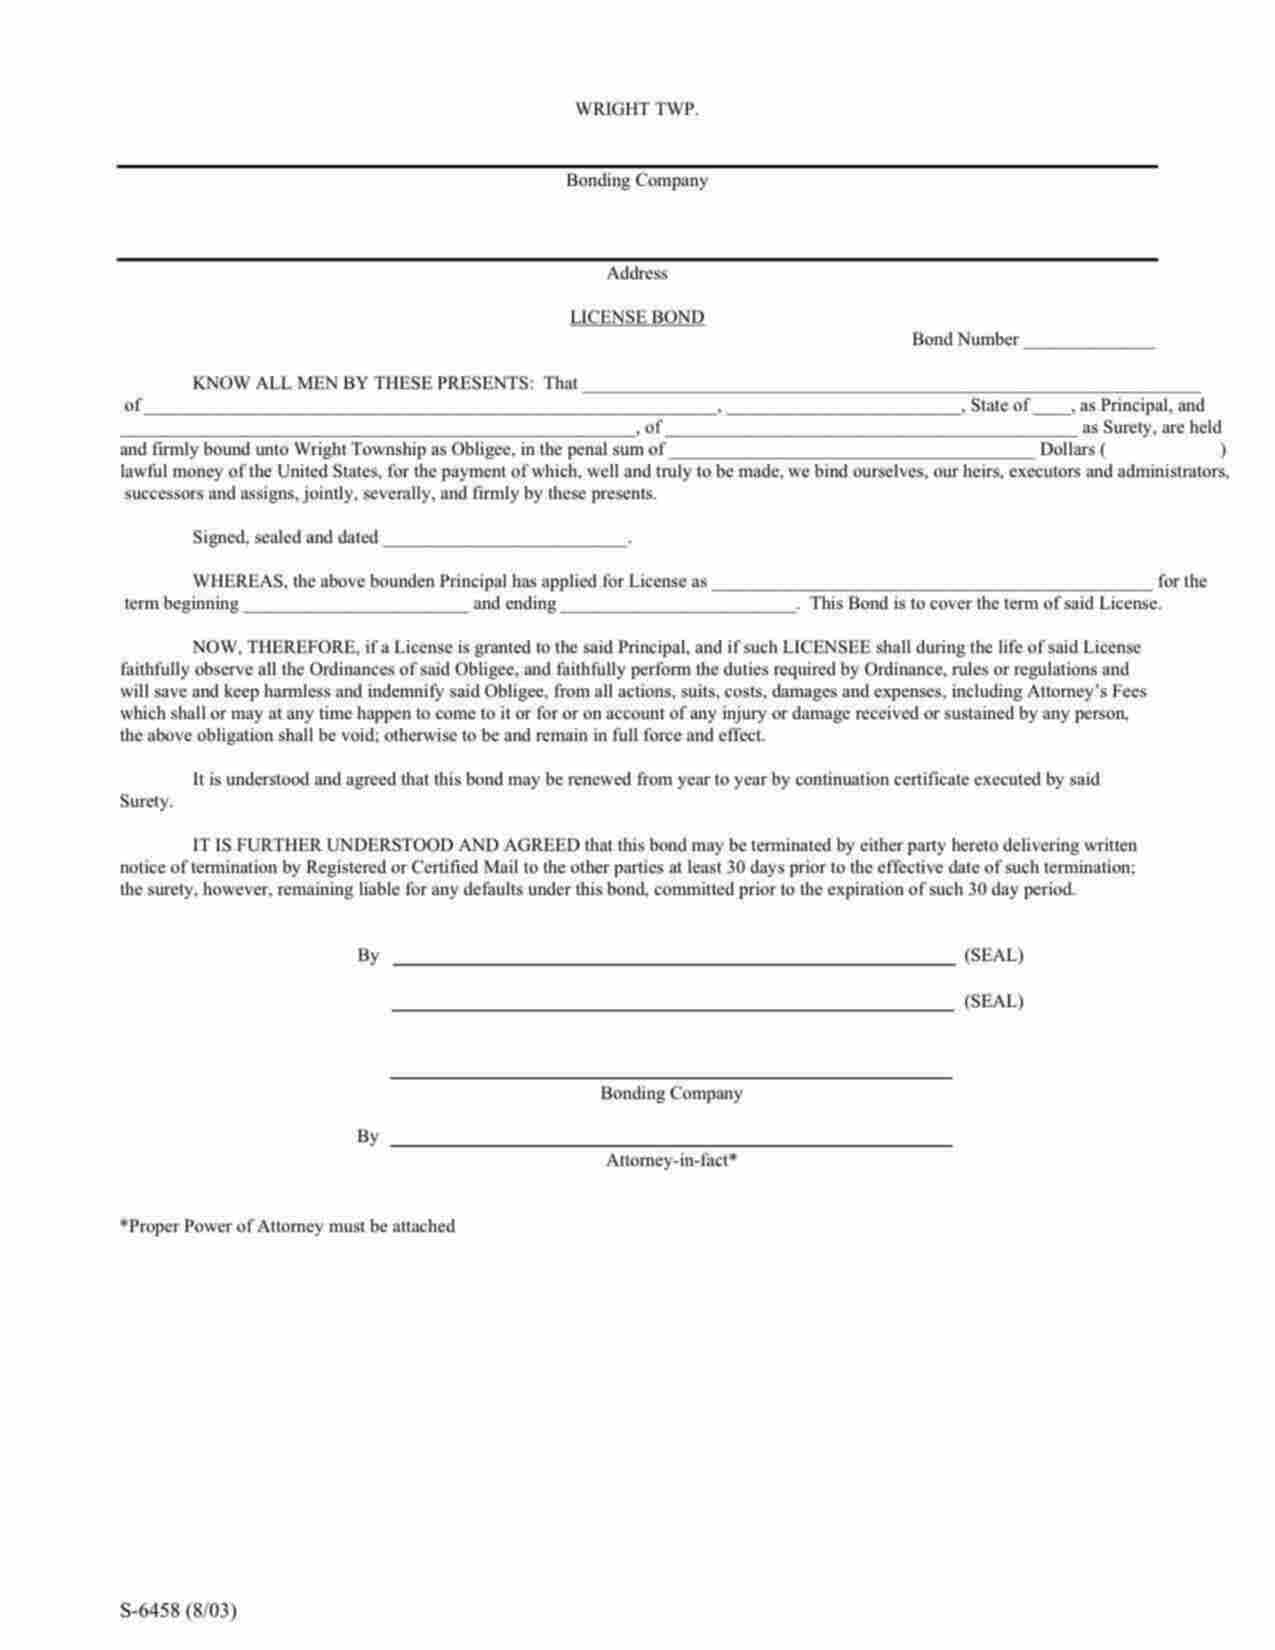 Pennsylvania Contractor's License Bond Form